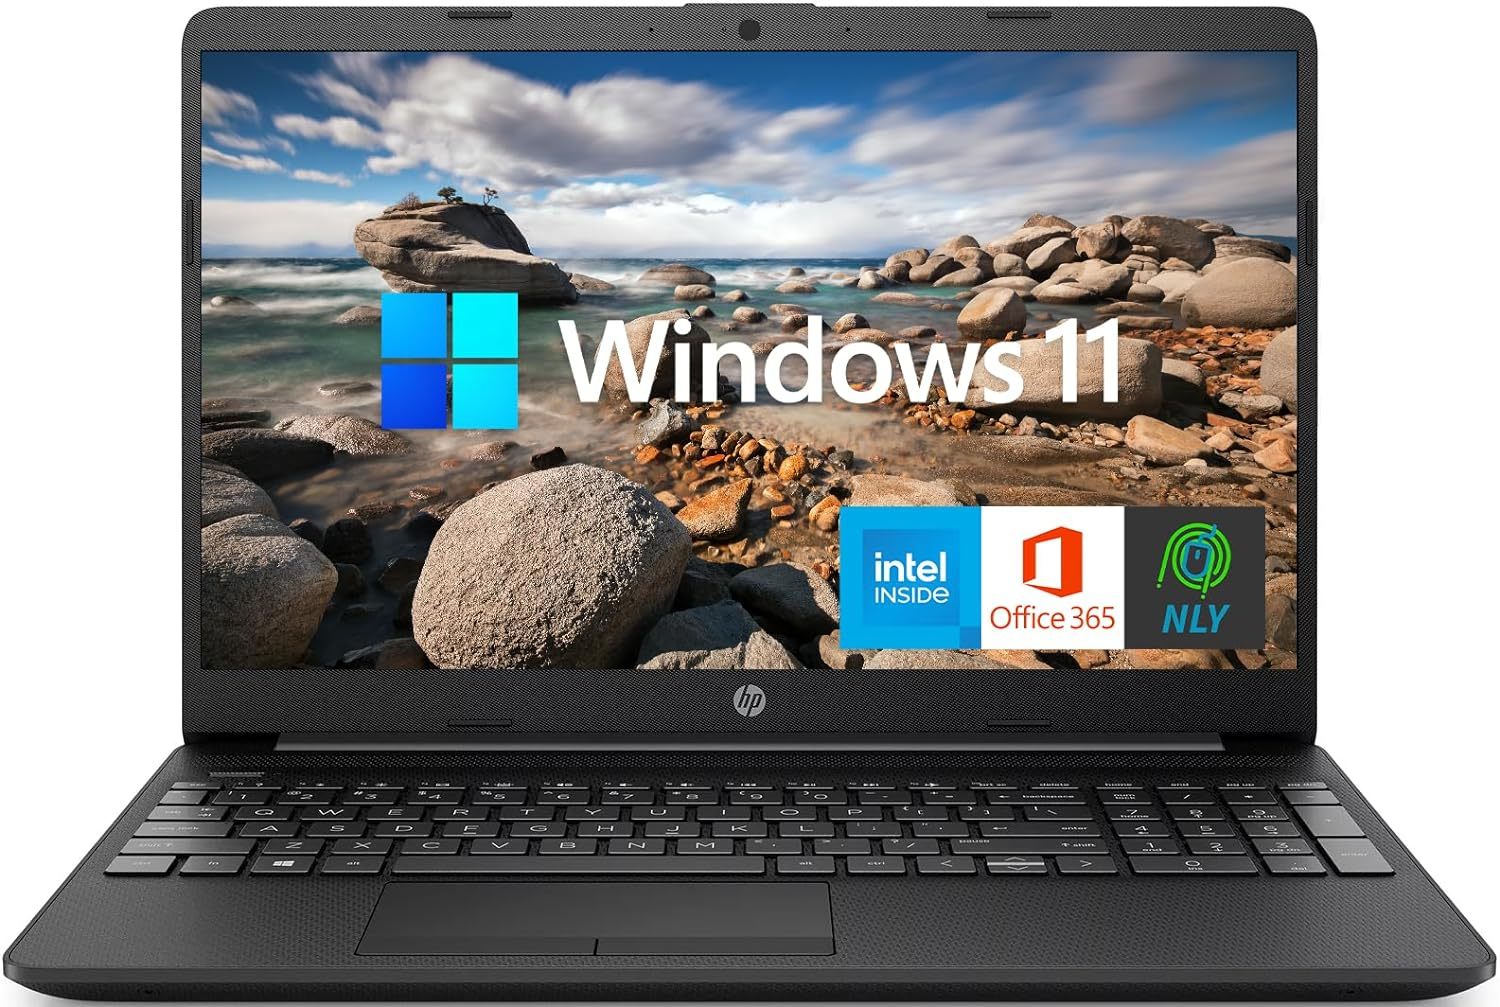 HP 15.6 Laptop with 1 Year Microsoft Office 365,Intel Pentium Quad-Core Processor,Long Battery Life,RJ-45 Ethernet Port,USB Type-C,Wi-Fi,Webcam,HDMI,NLY MP,Windows 11 (16GB RAM | 1TB SSD) Black